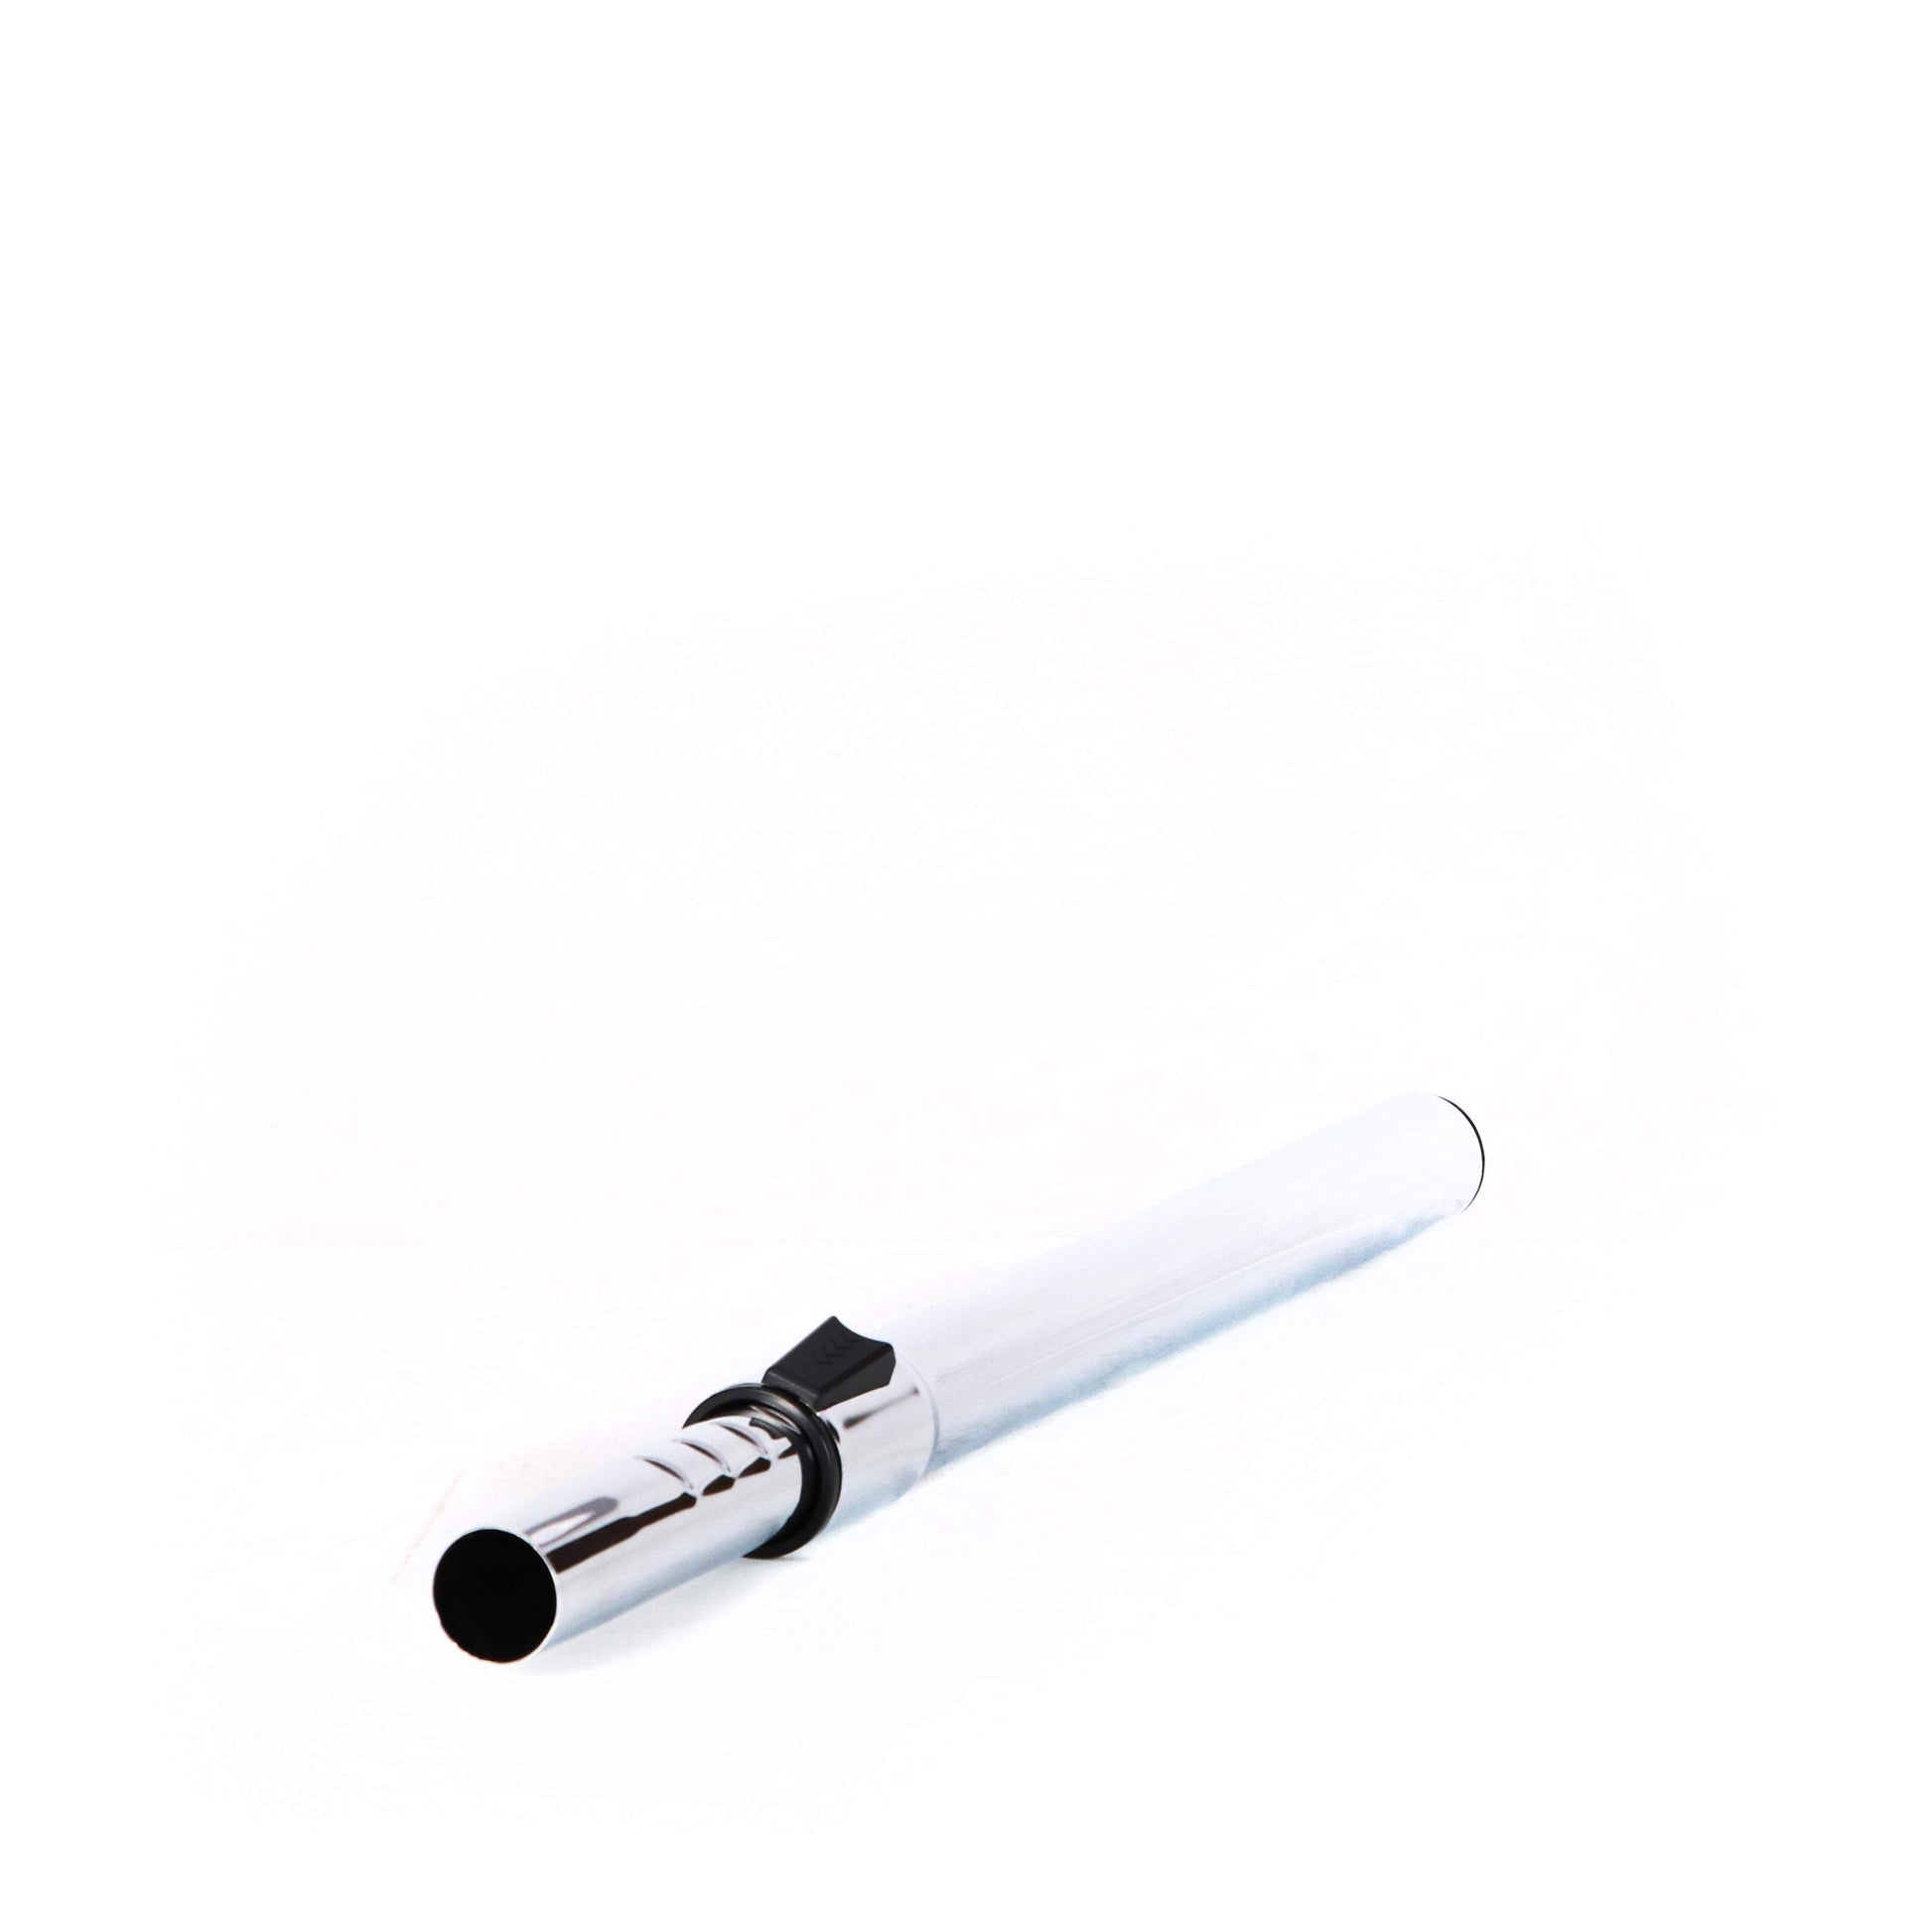 TopMatic 2-in-1 Handheld Stick Vacuum Cleaner 600 Watt for Cleaning Dirt, Debris, Pet Hair-Royal Brands Co-